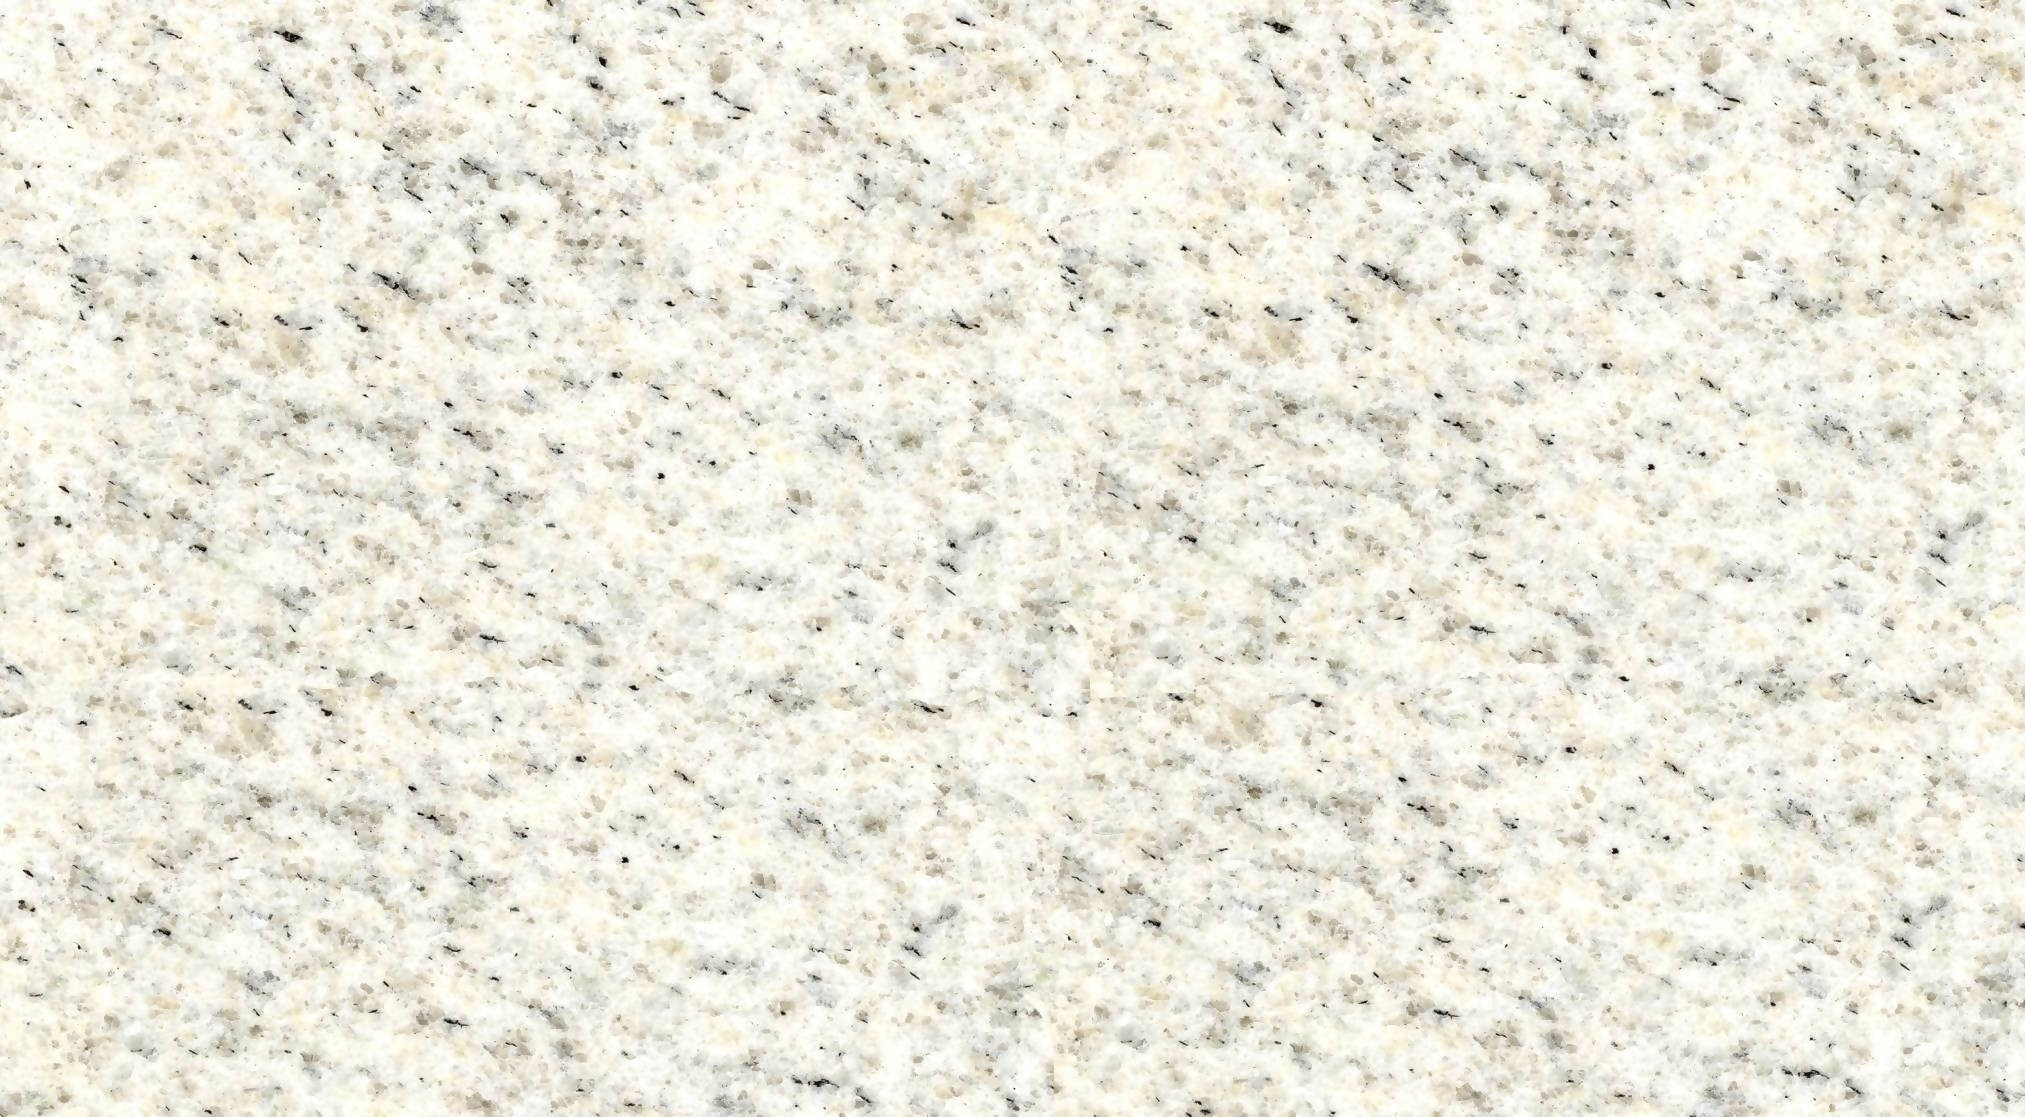 IMPERIAL WHITE GRANITE,Granite,Blyth Marble Ltd,www.work-tops.com